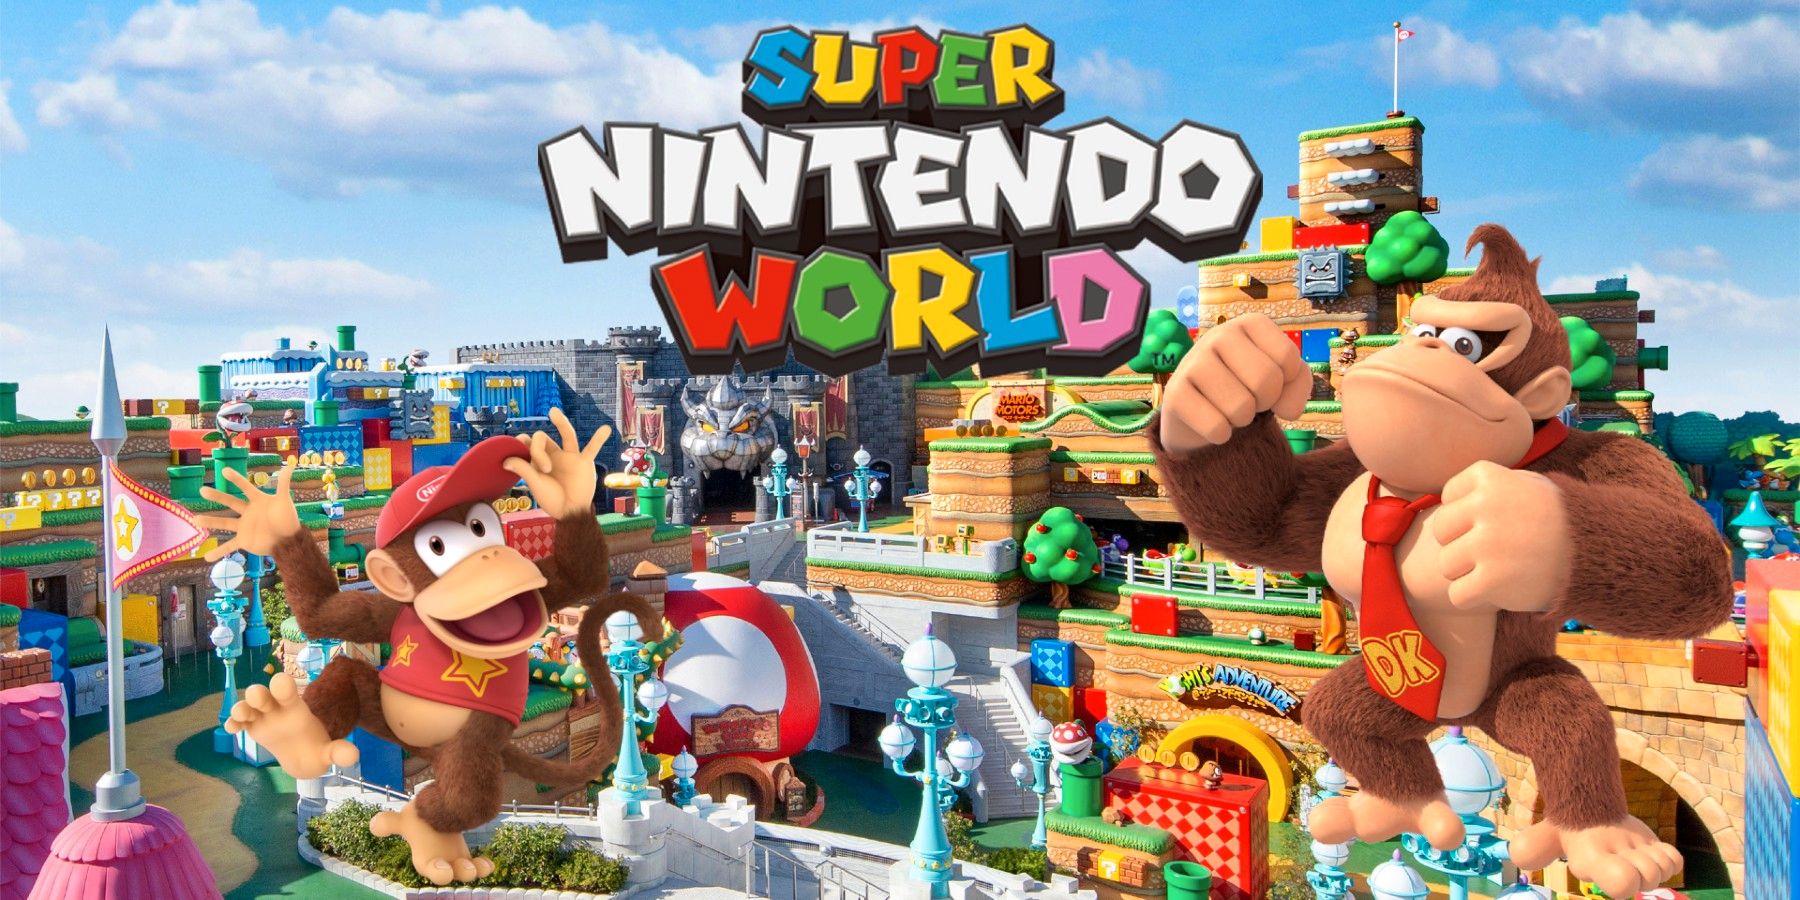 Super Nintendo World conferma l’espansione Donkey Kong